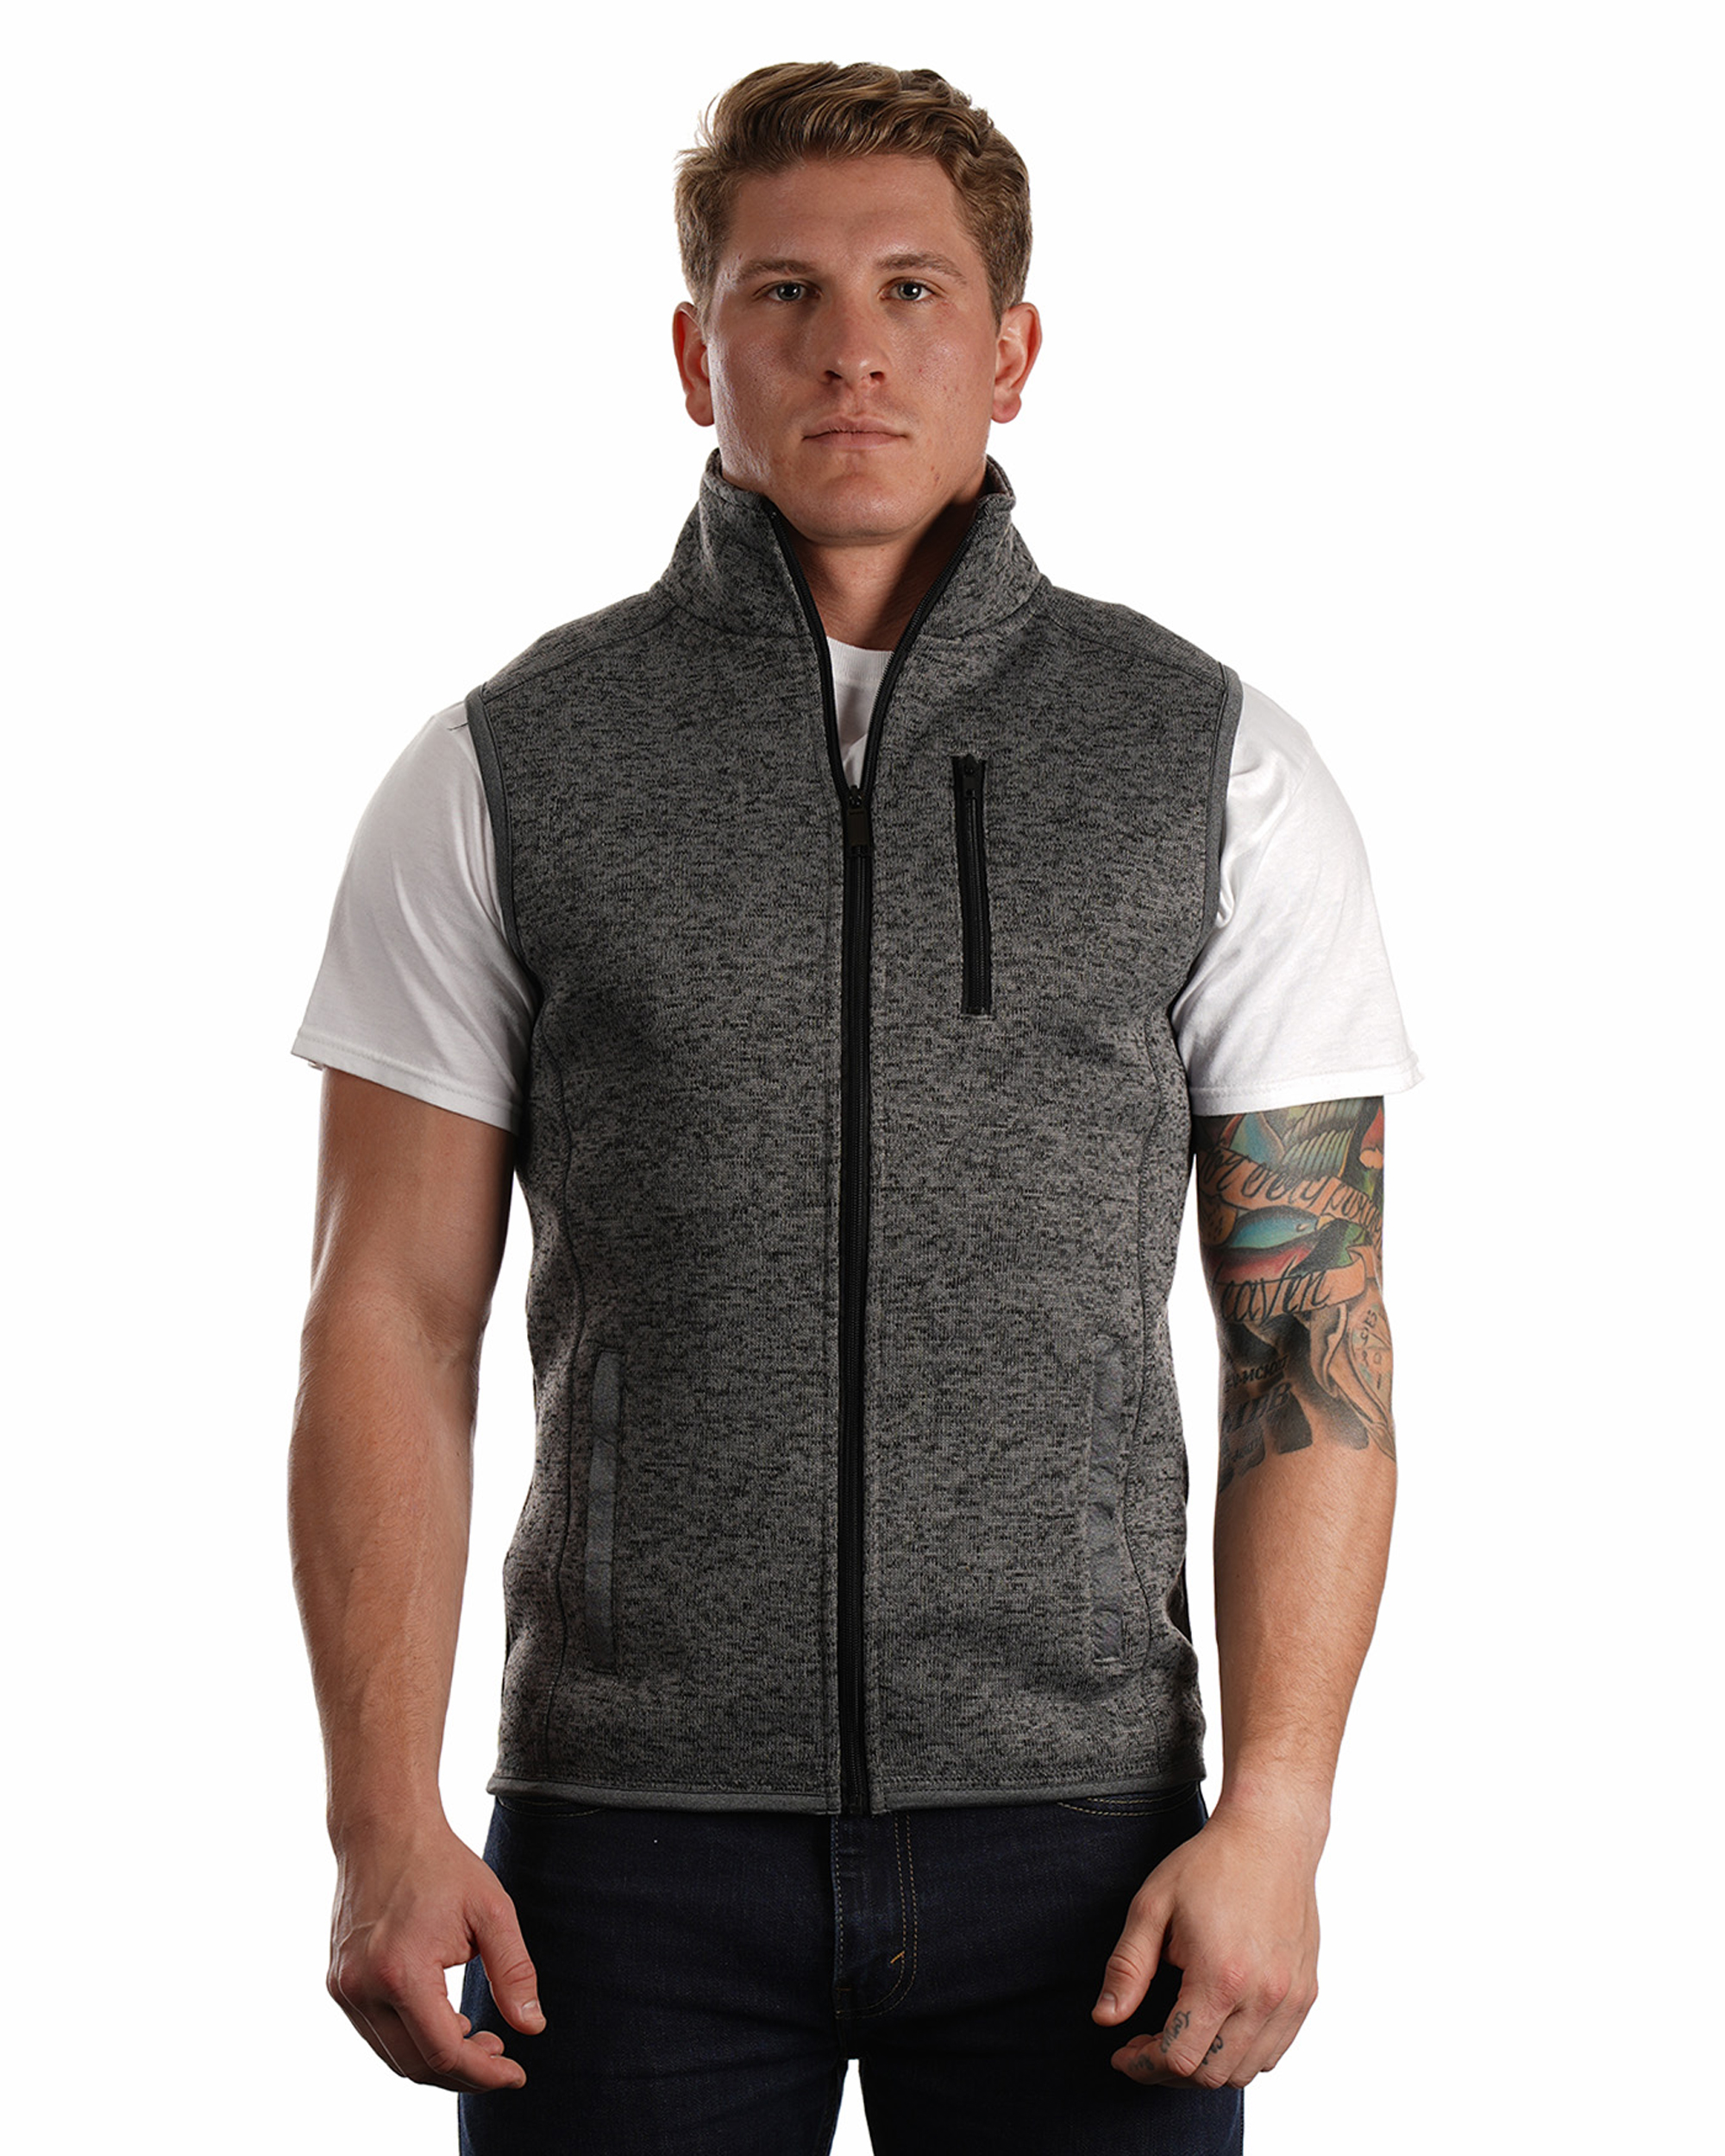 Burnside 3910 Drop Ship - Sweater Fleece Vest